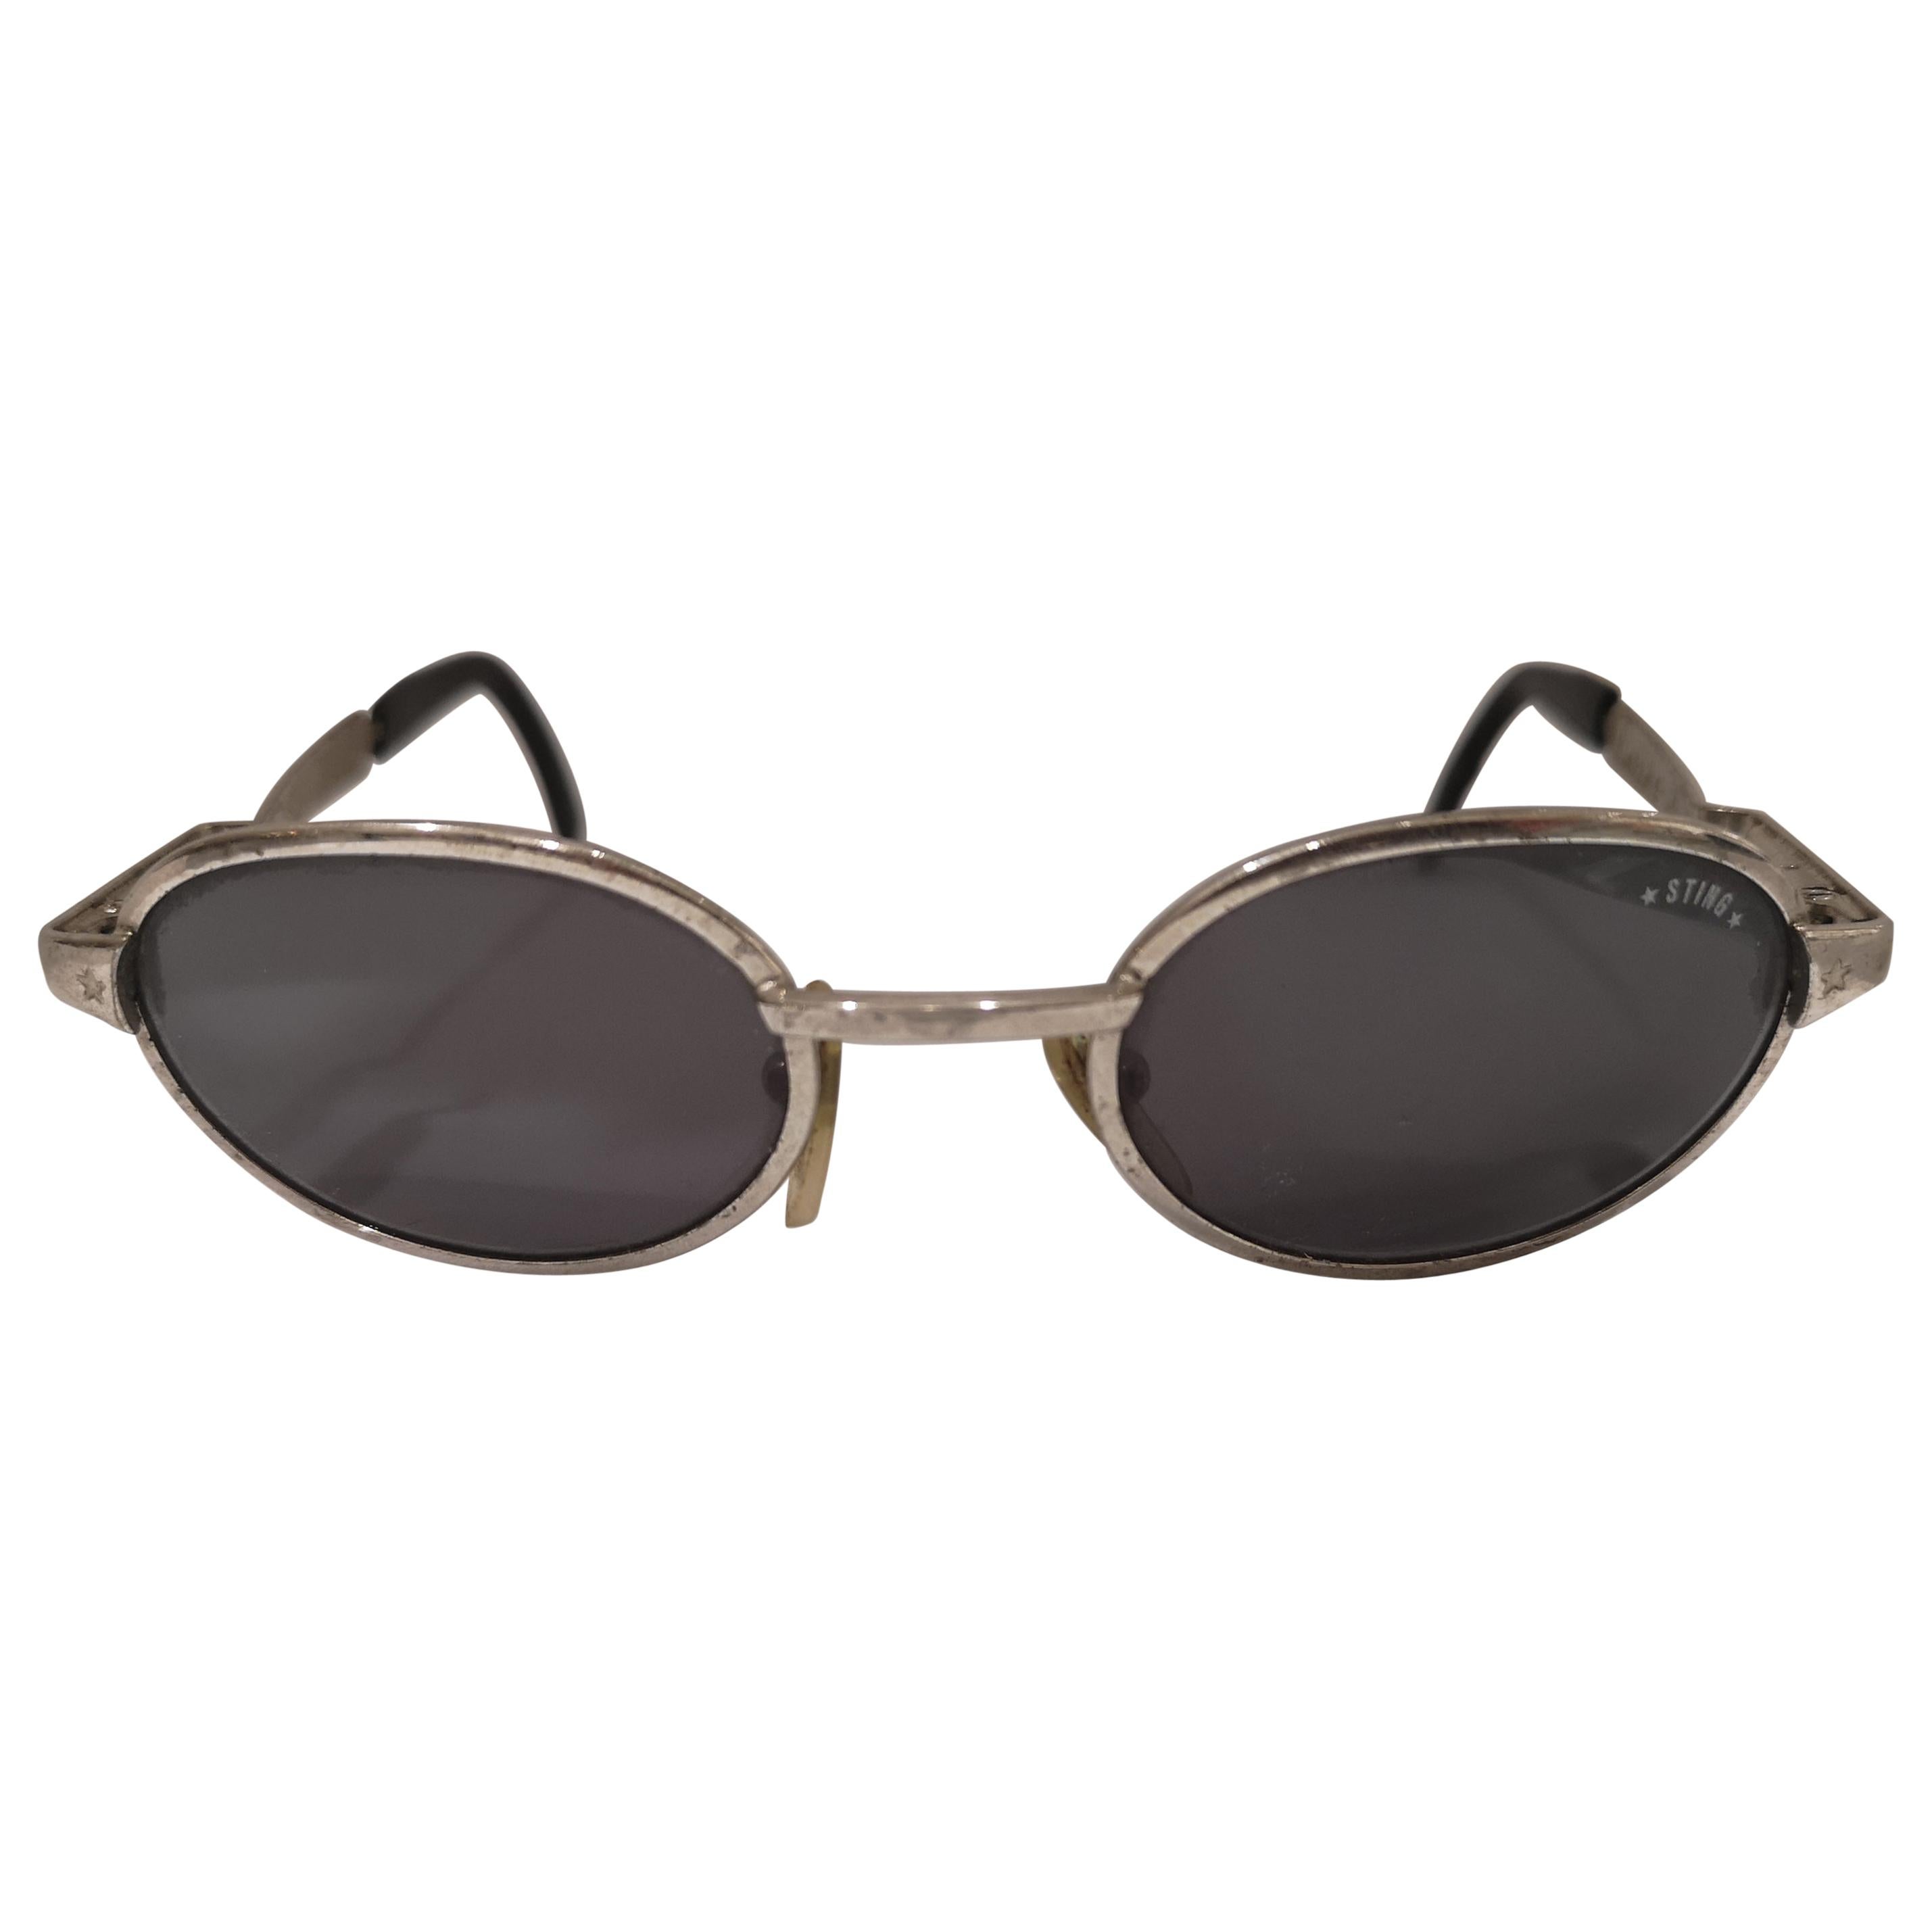 Sting black lens silver sunglasses